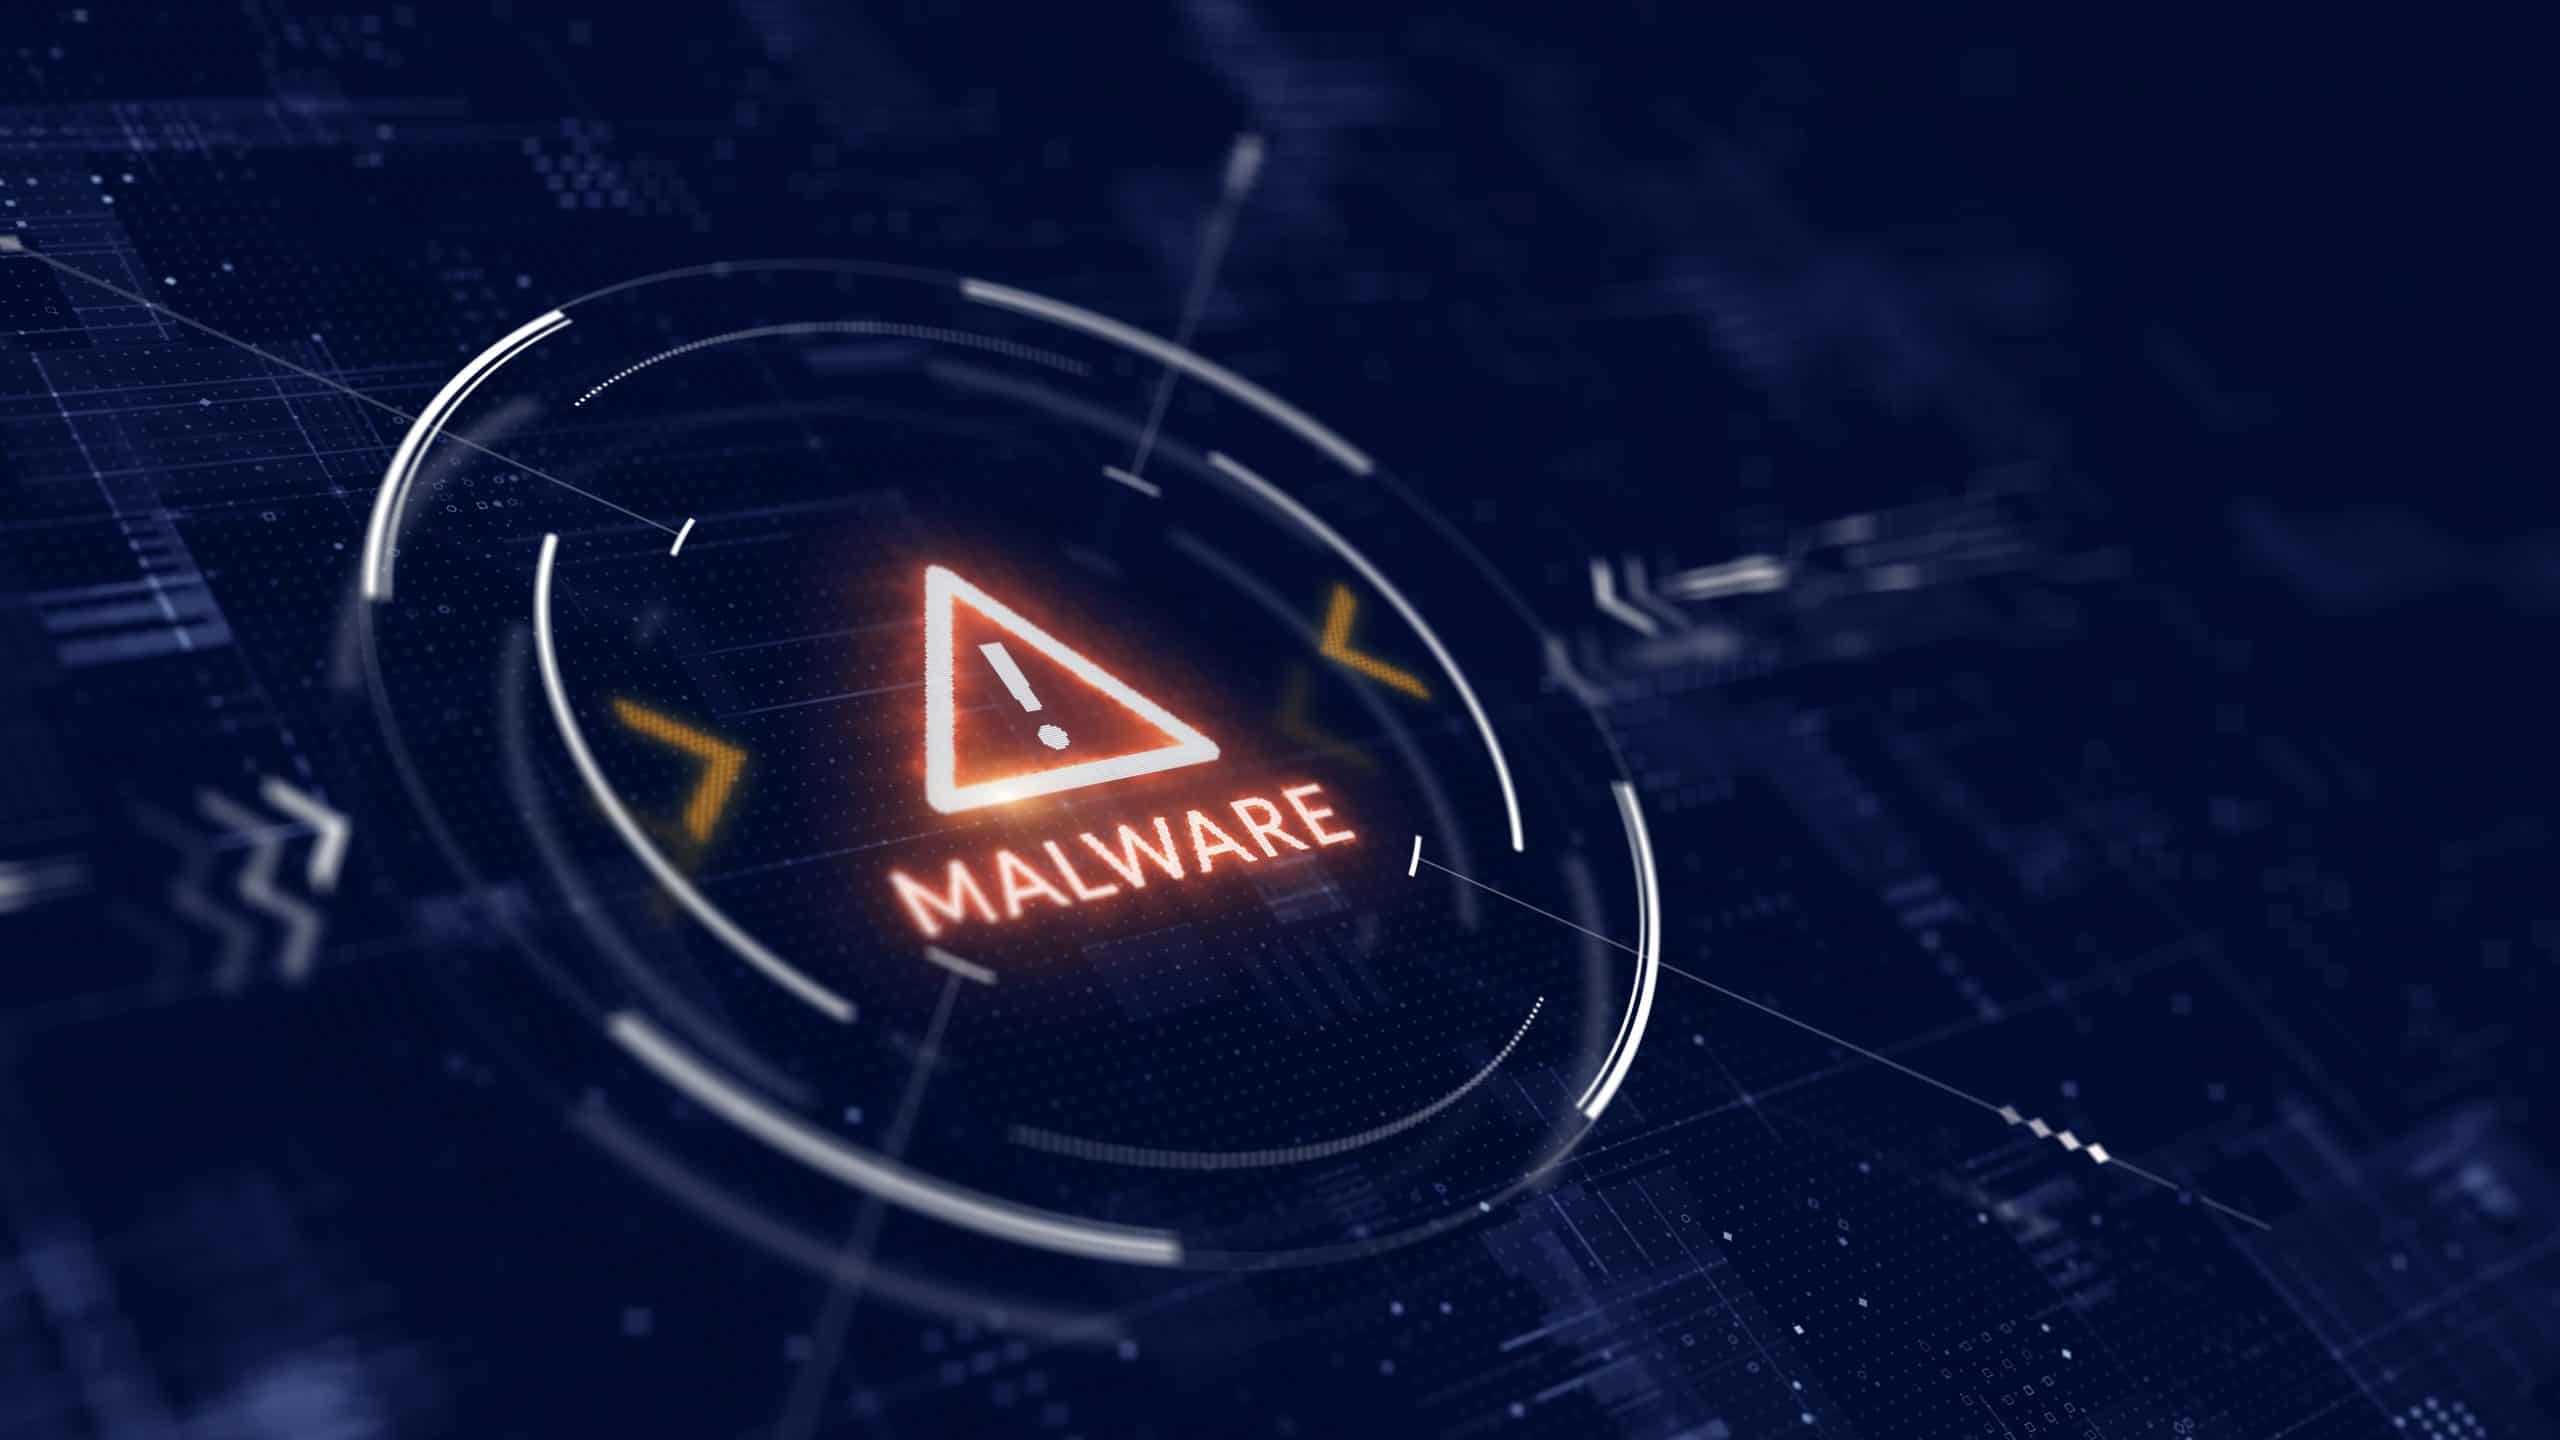 Detecting of a malware virus